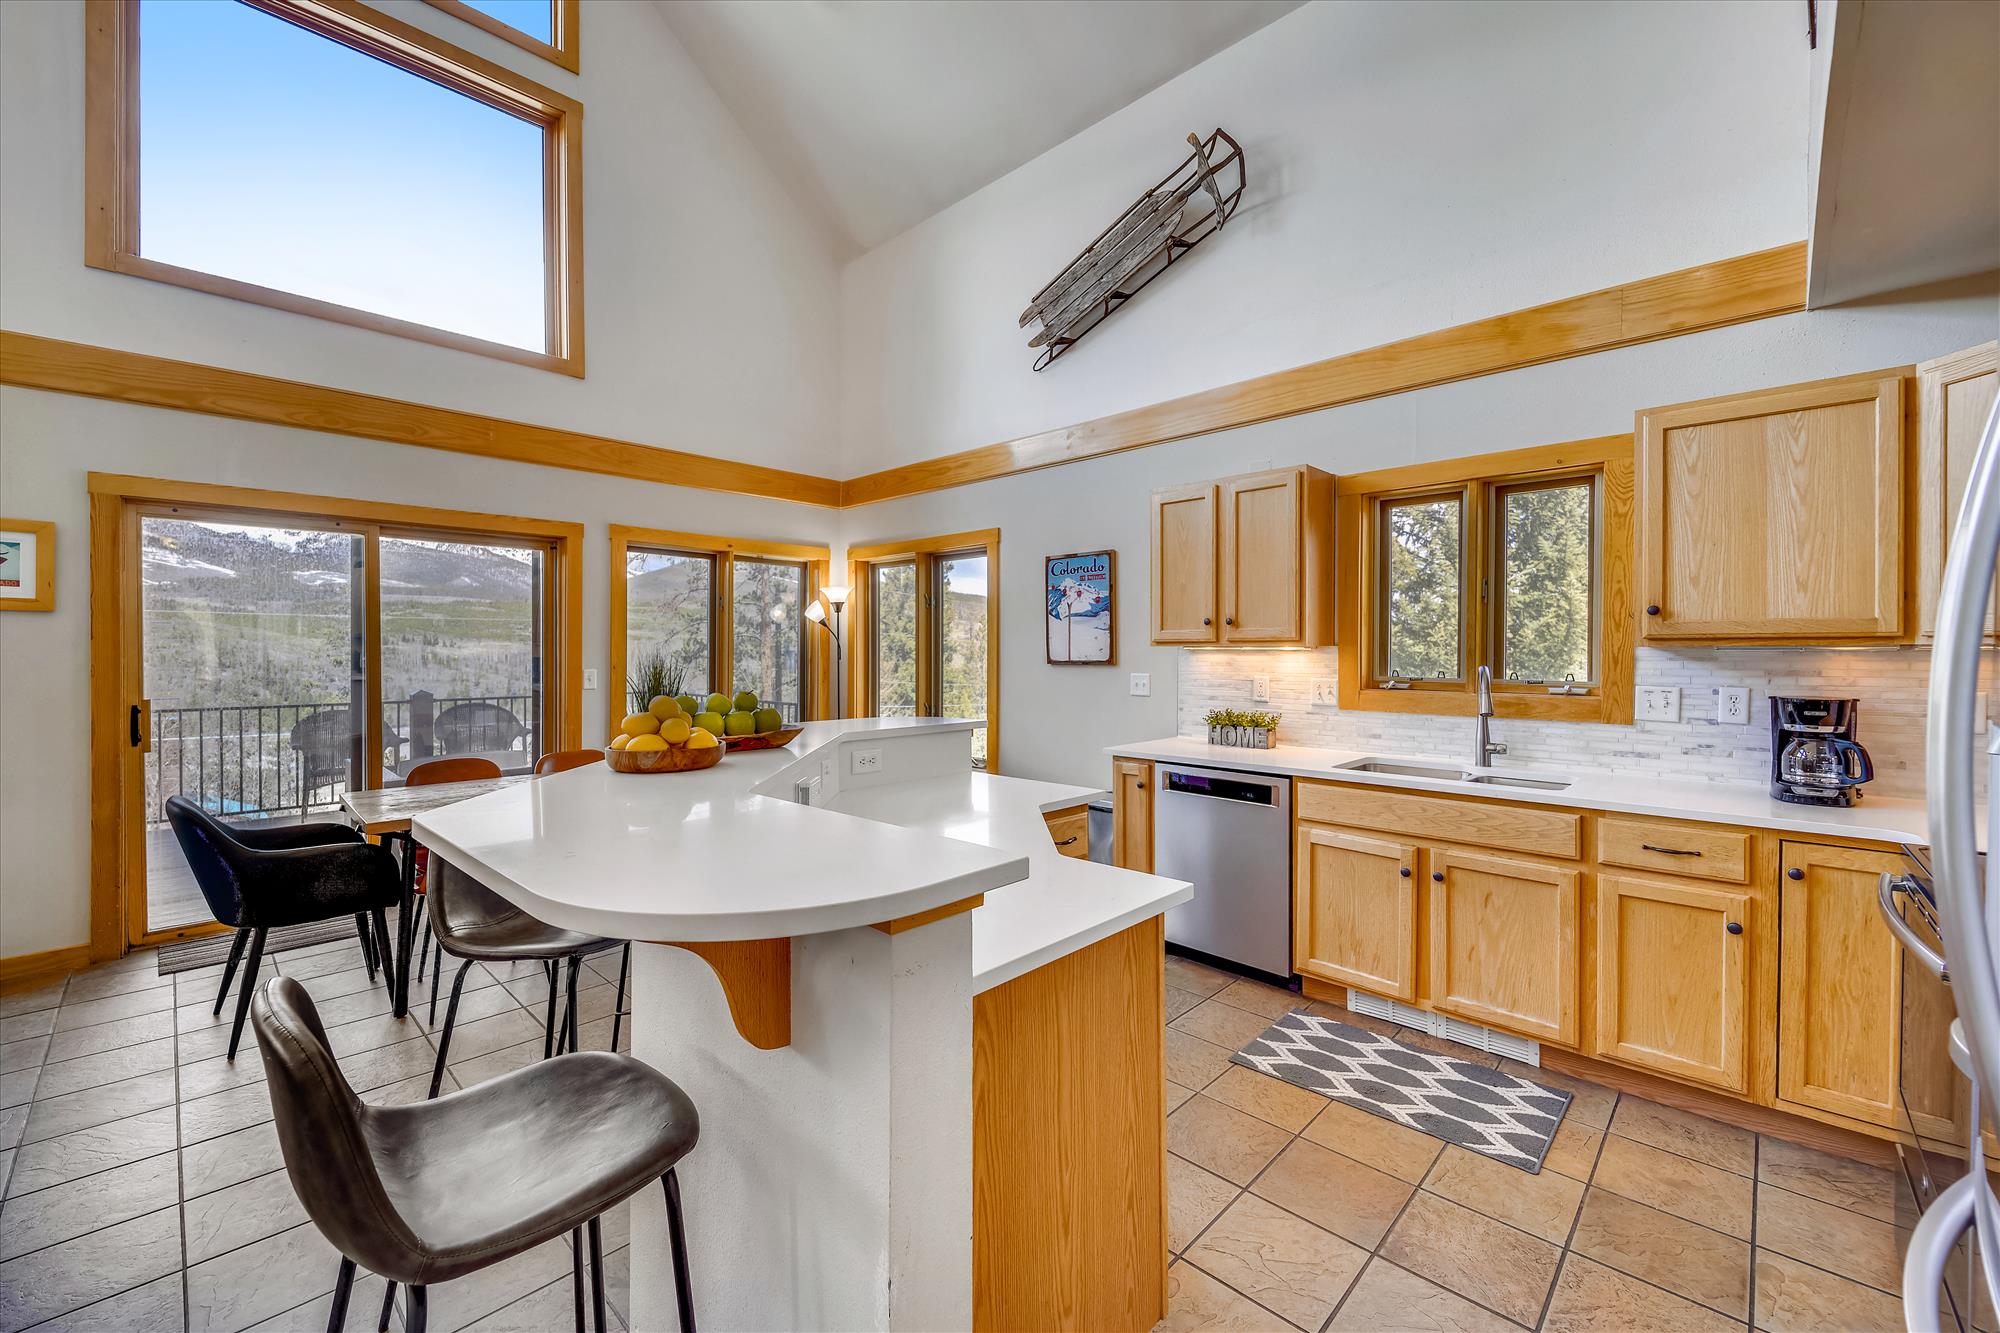 Kitchen with bar area - Powder Moose Villa - Breckenridge Vacation Rental